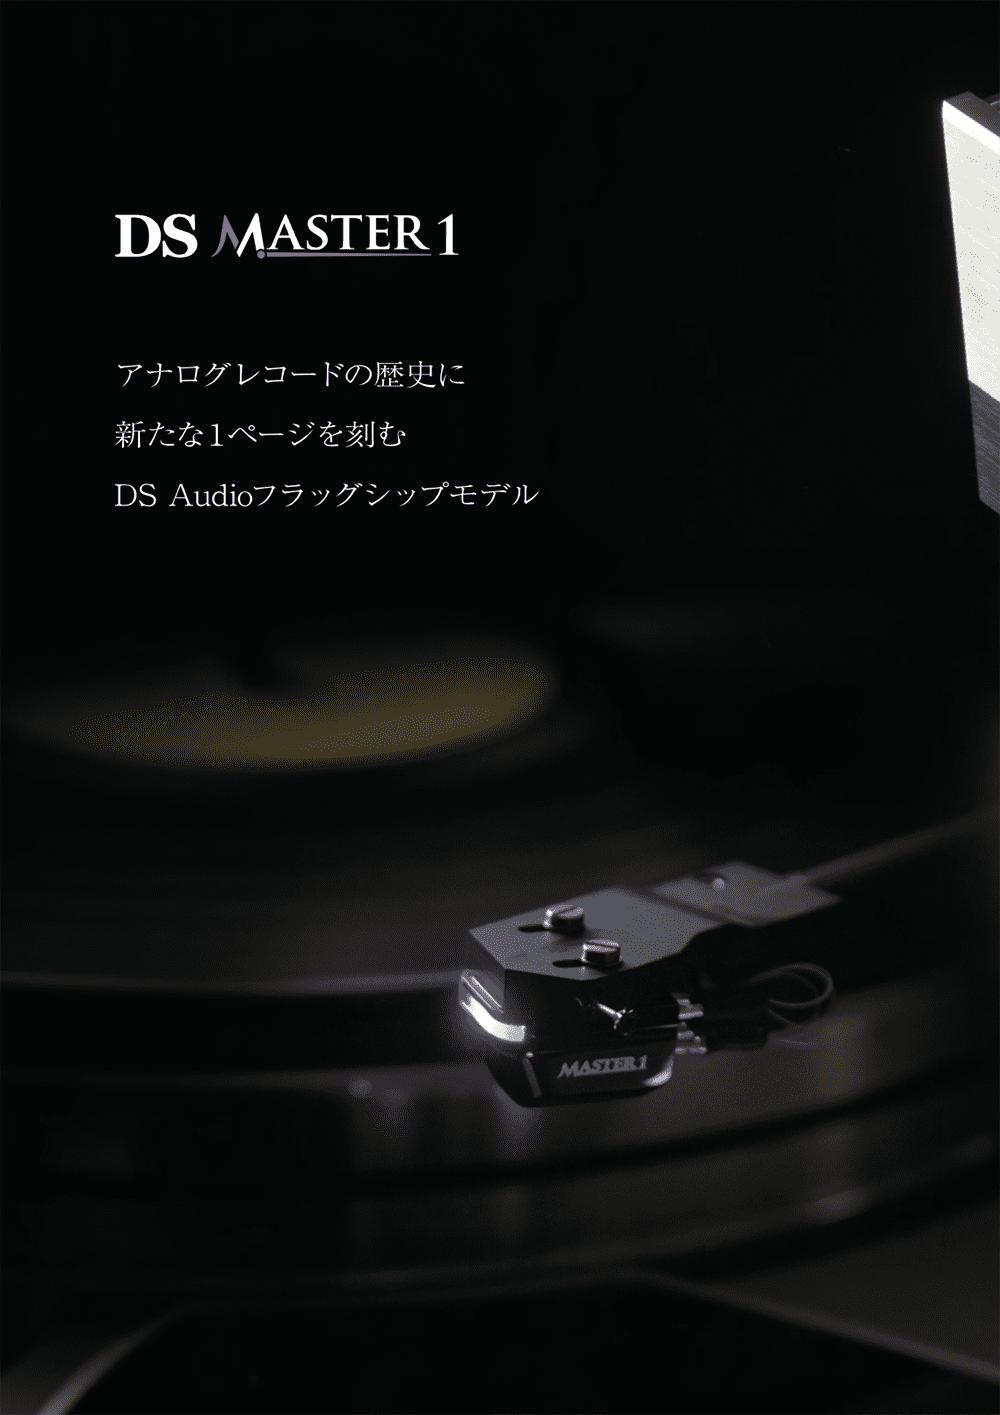 DS Master1 catalog